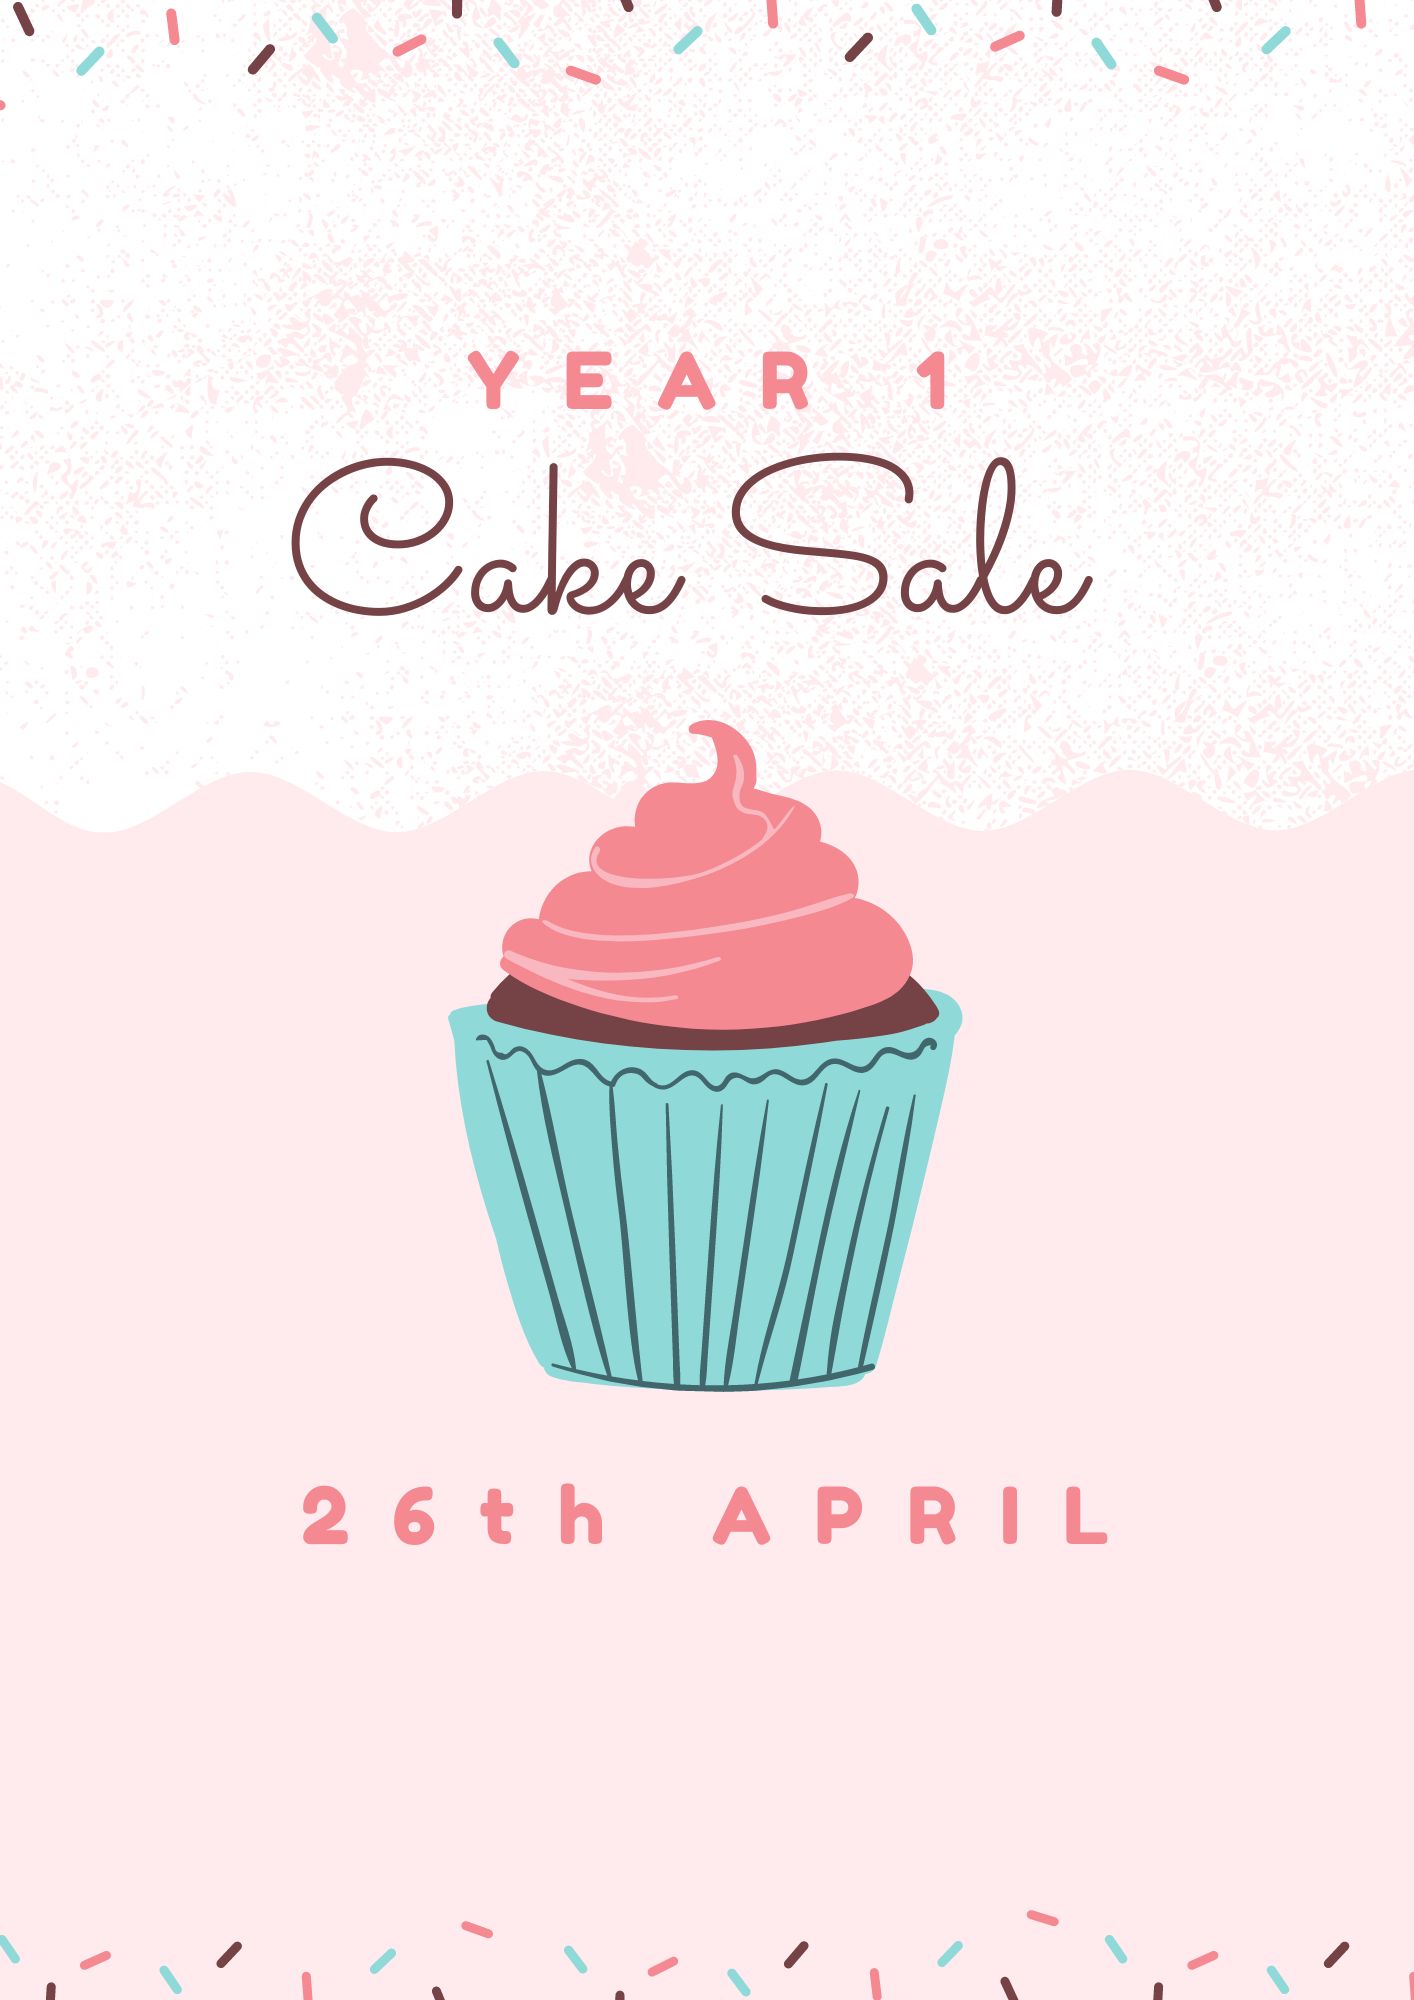 Year 1 Cake Sale2